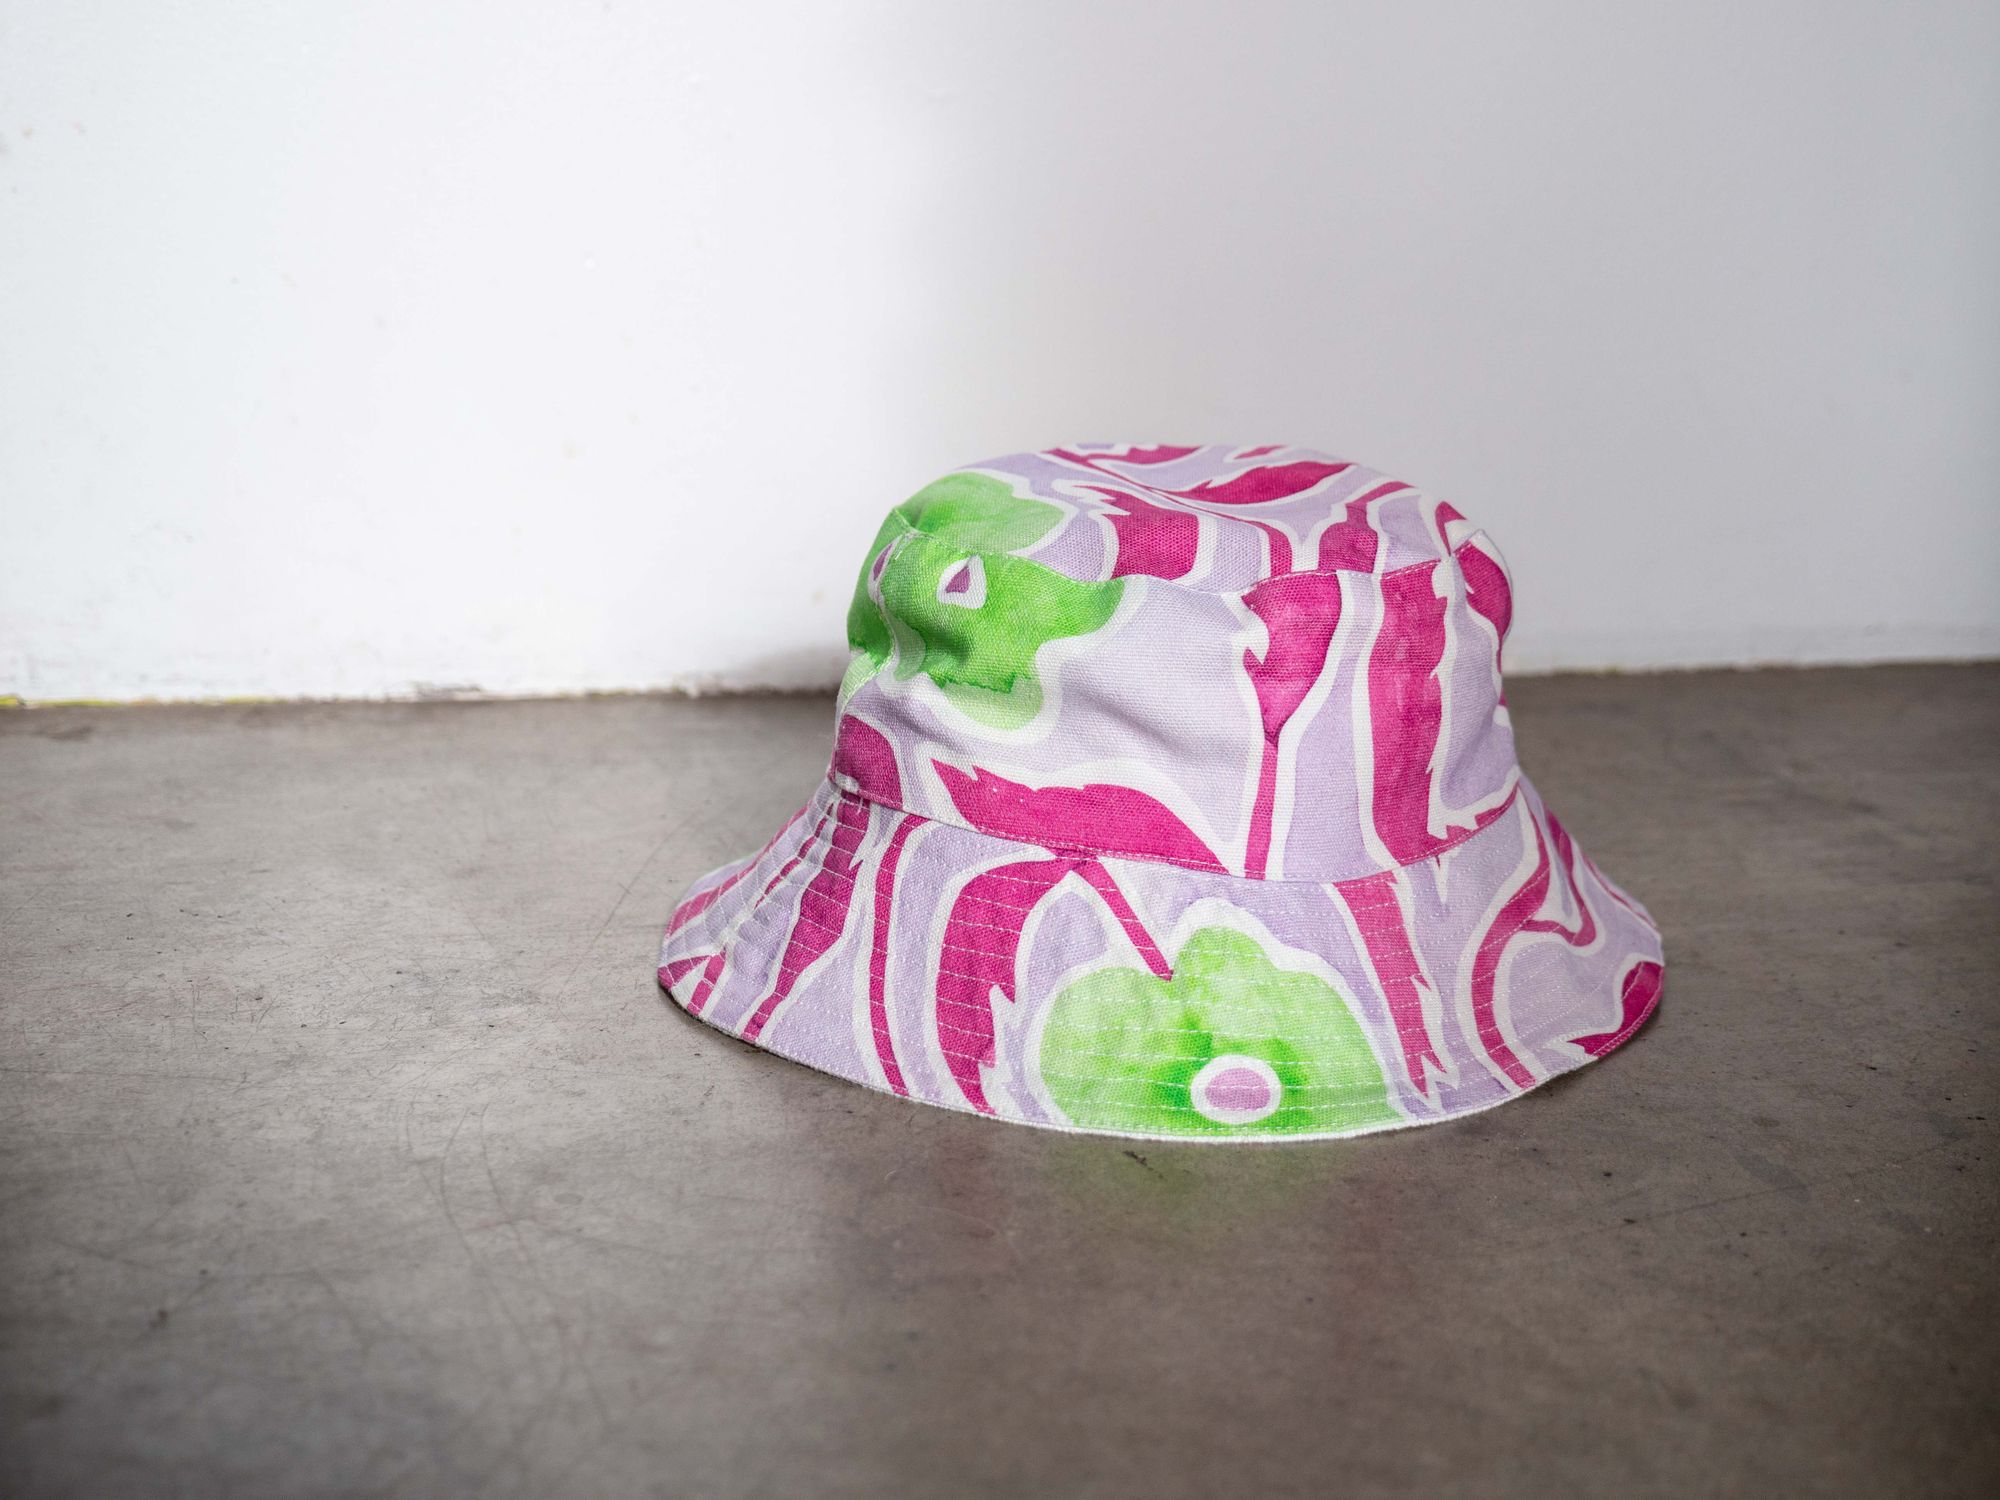 1m... 3 hats! Meet the Elbe Textiles Bucket Hat Blog Art